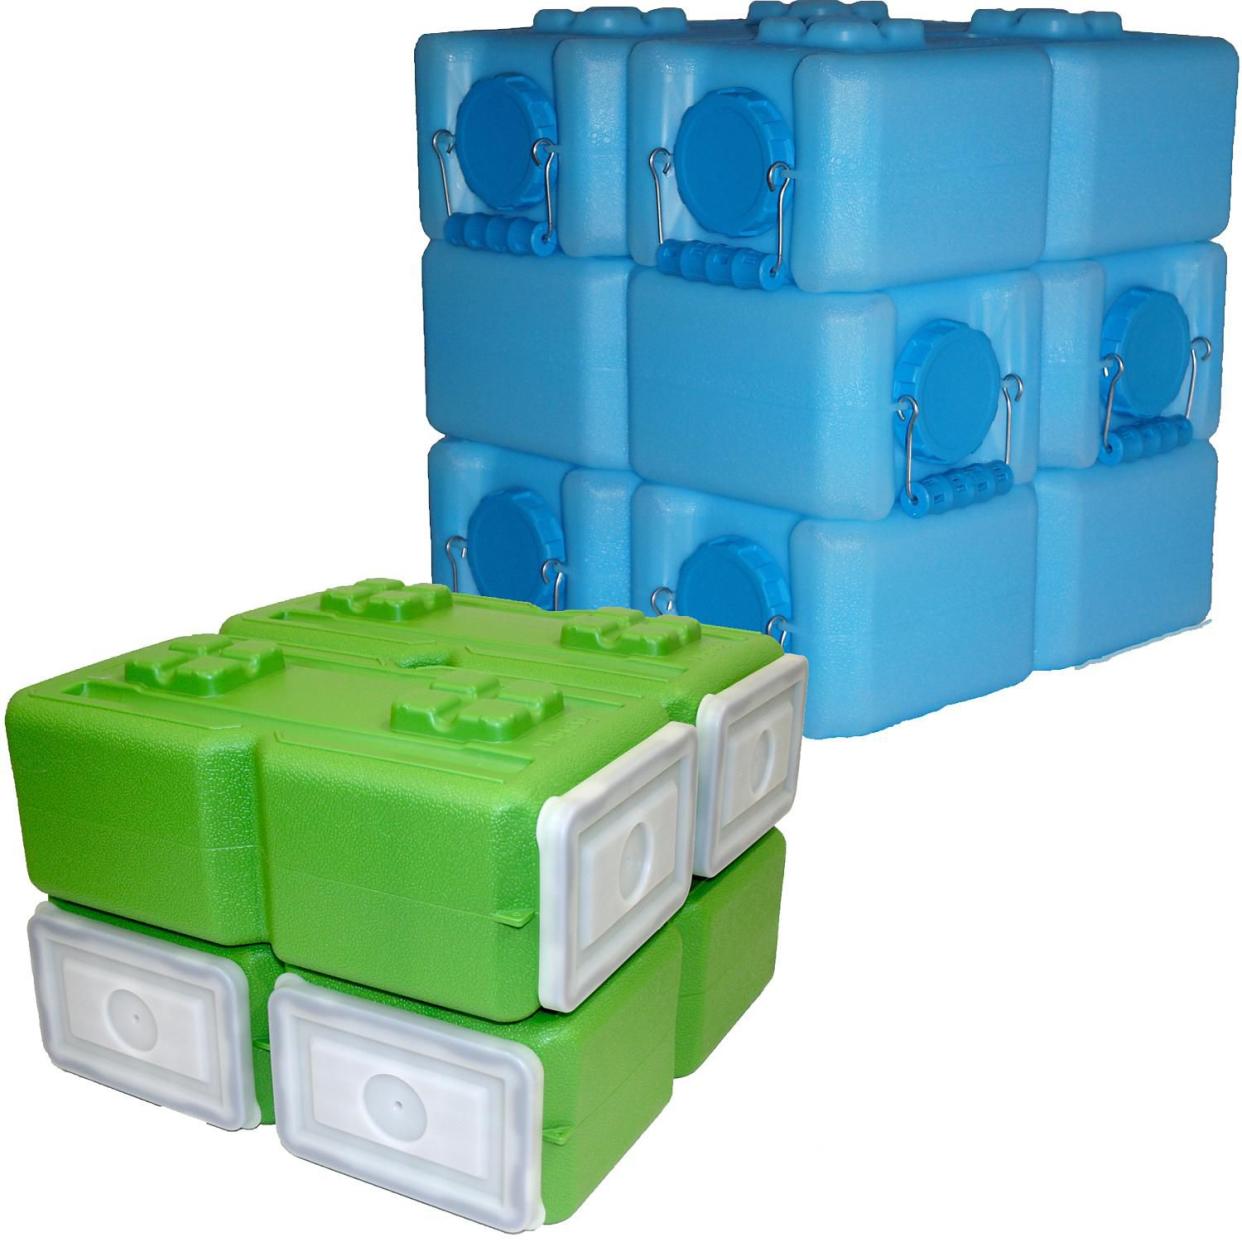 WaterBrick FoodBrick Storage System